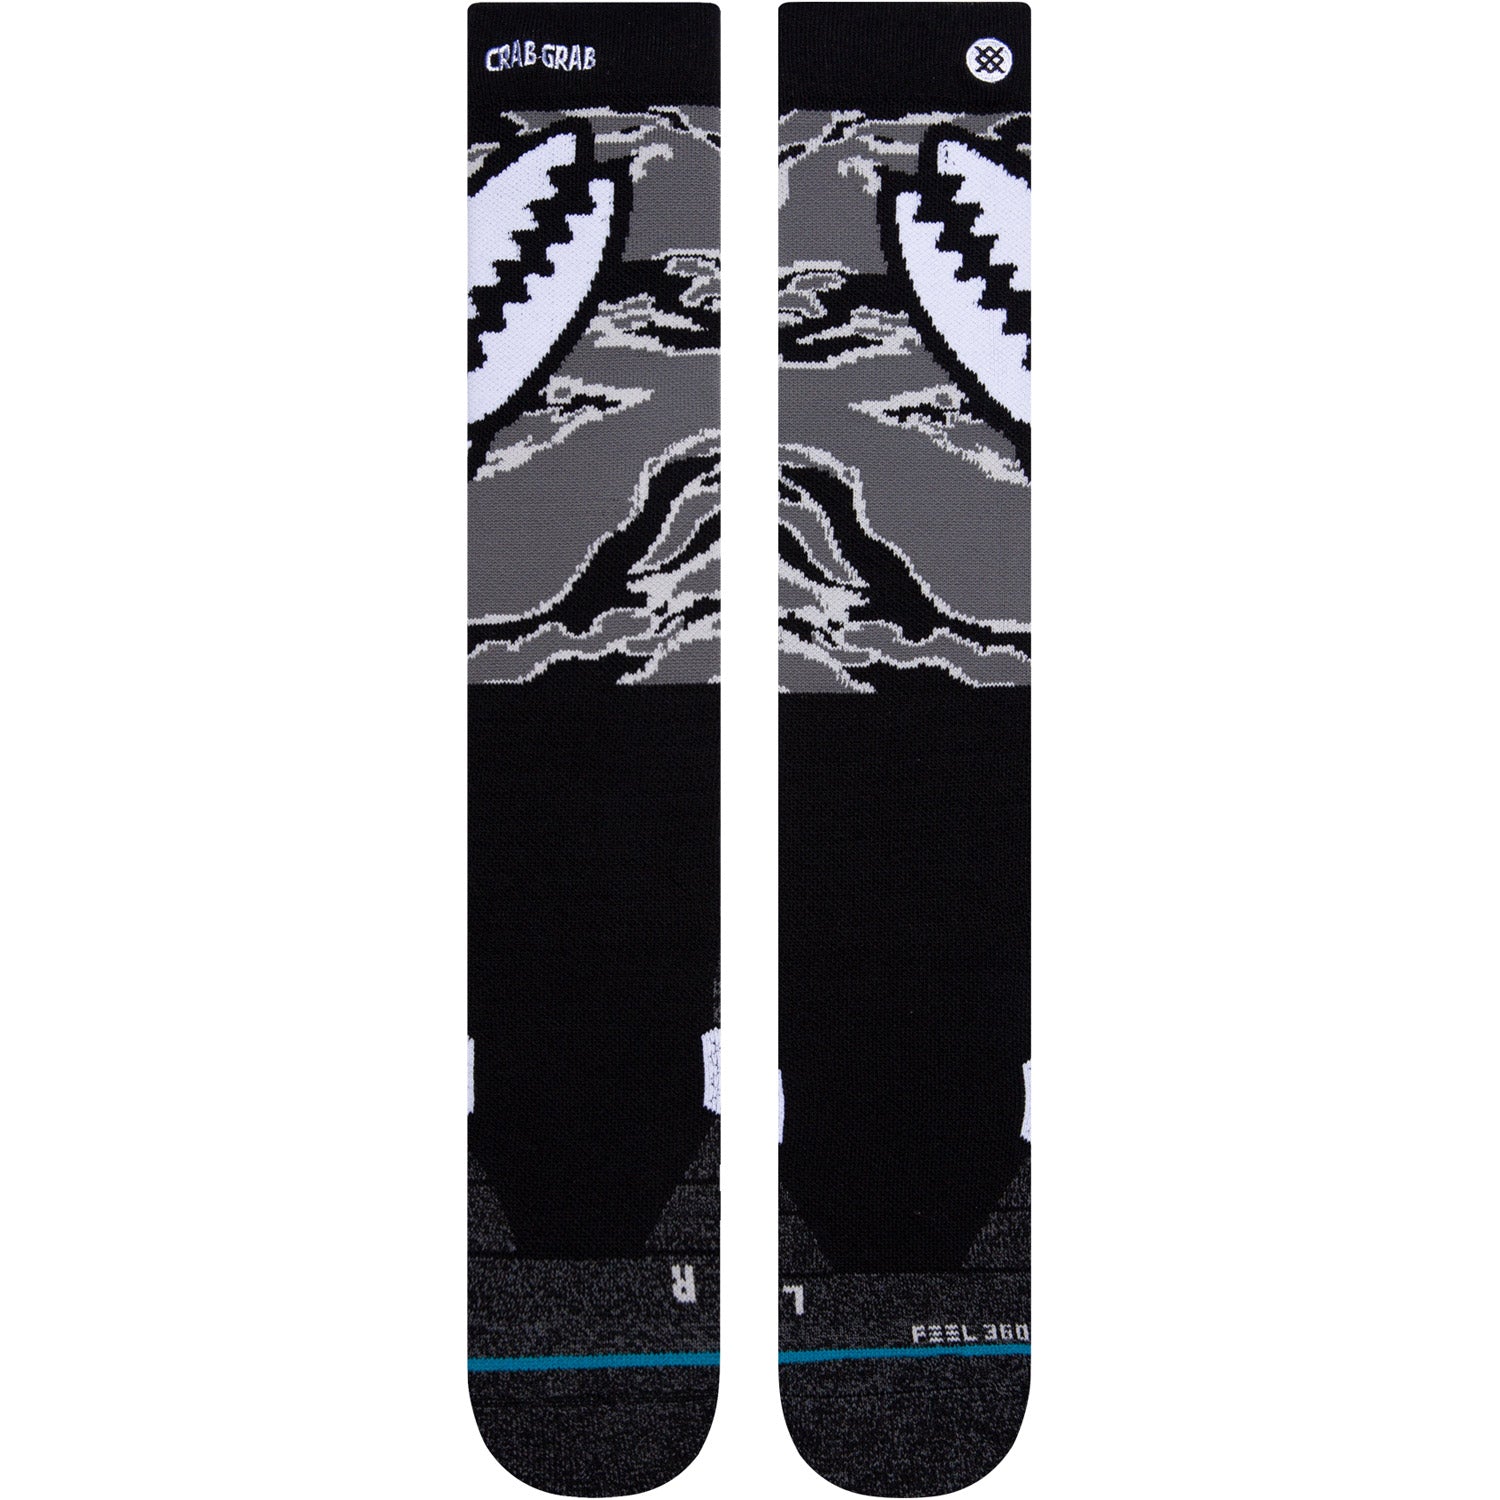 Camo Grab 2 Over the Calf Snowboard Sock